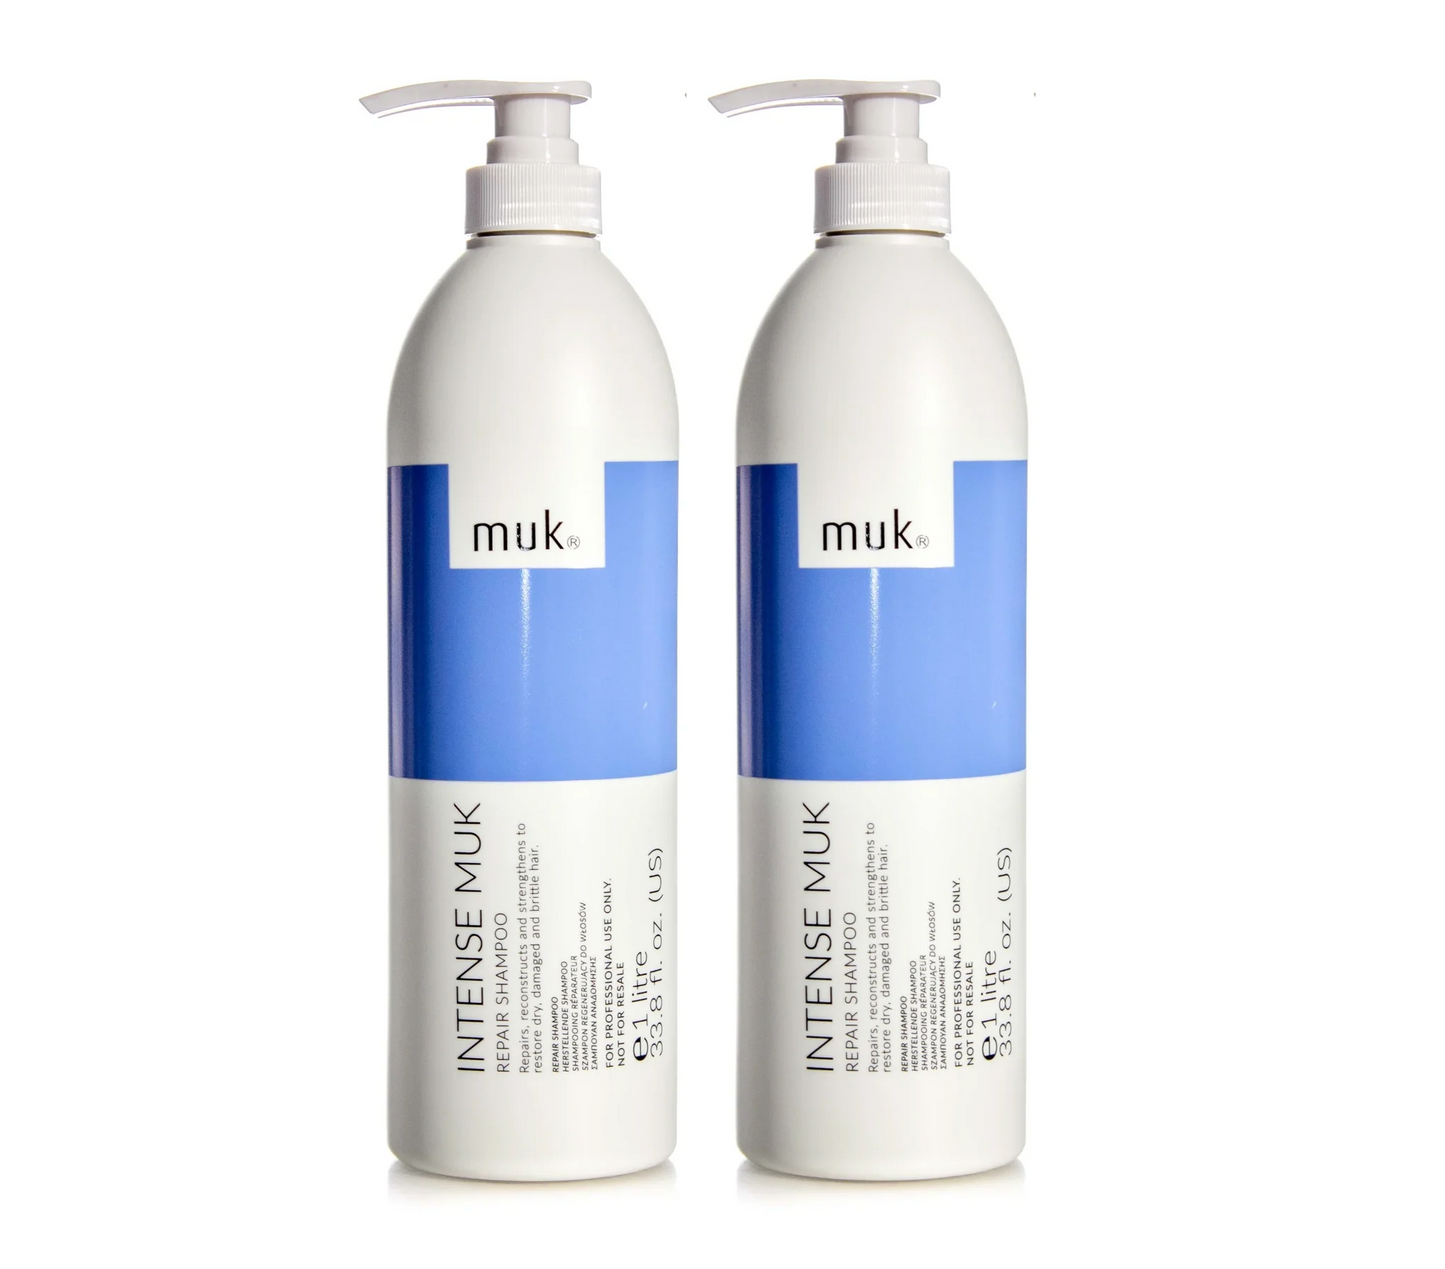 Muk Intense Repair Shampoo 1000ml Duo